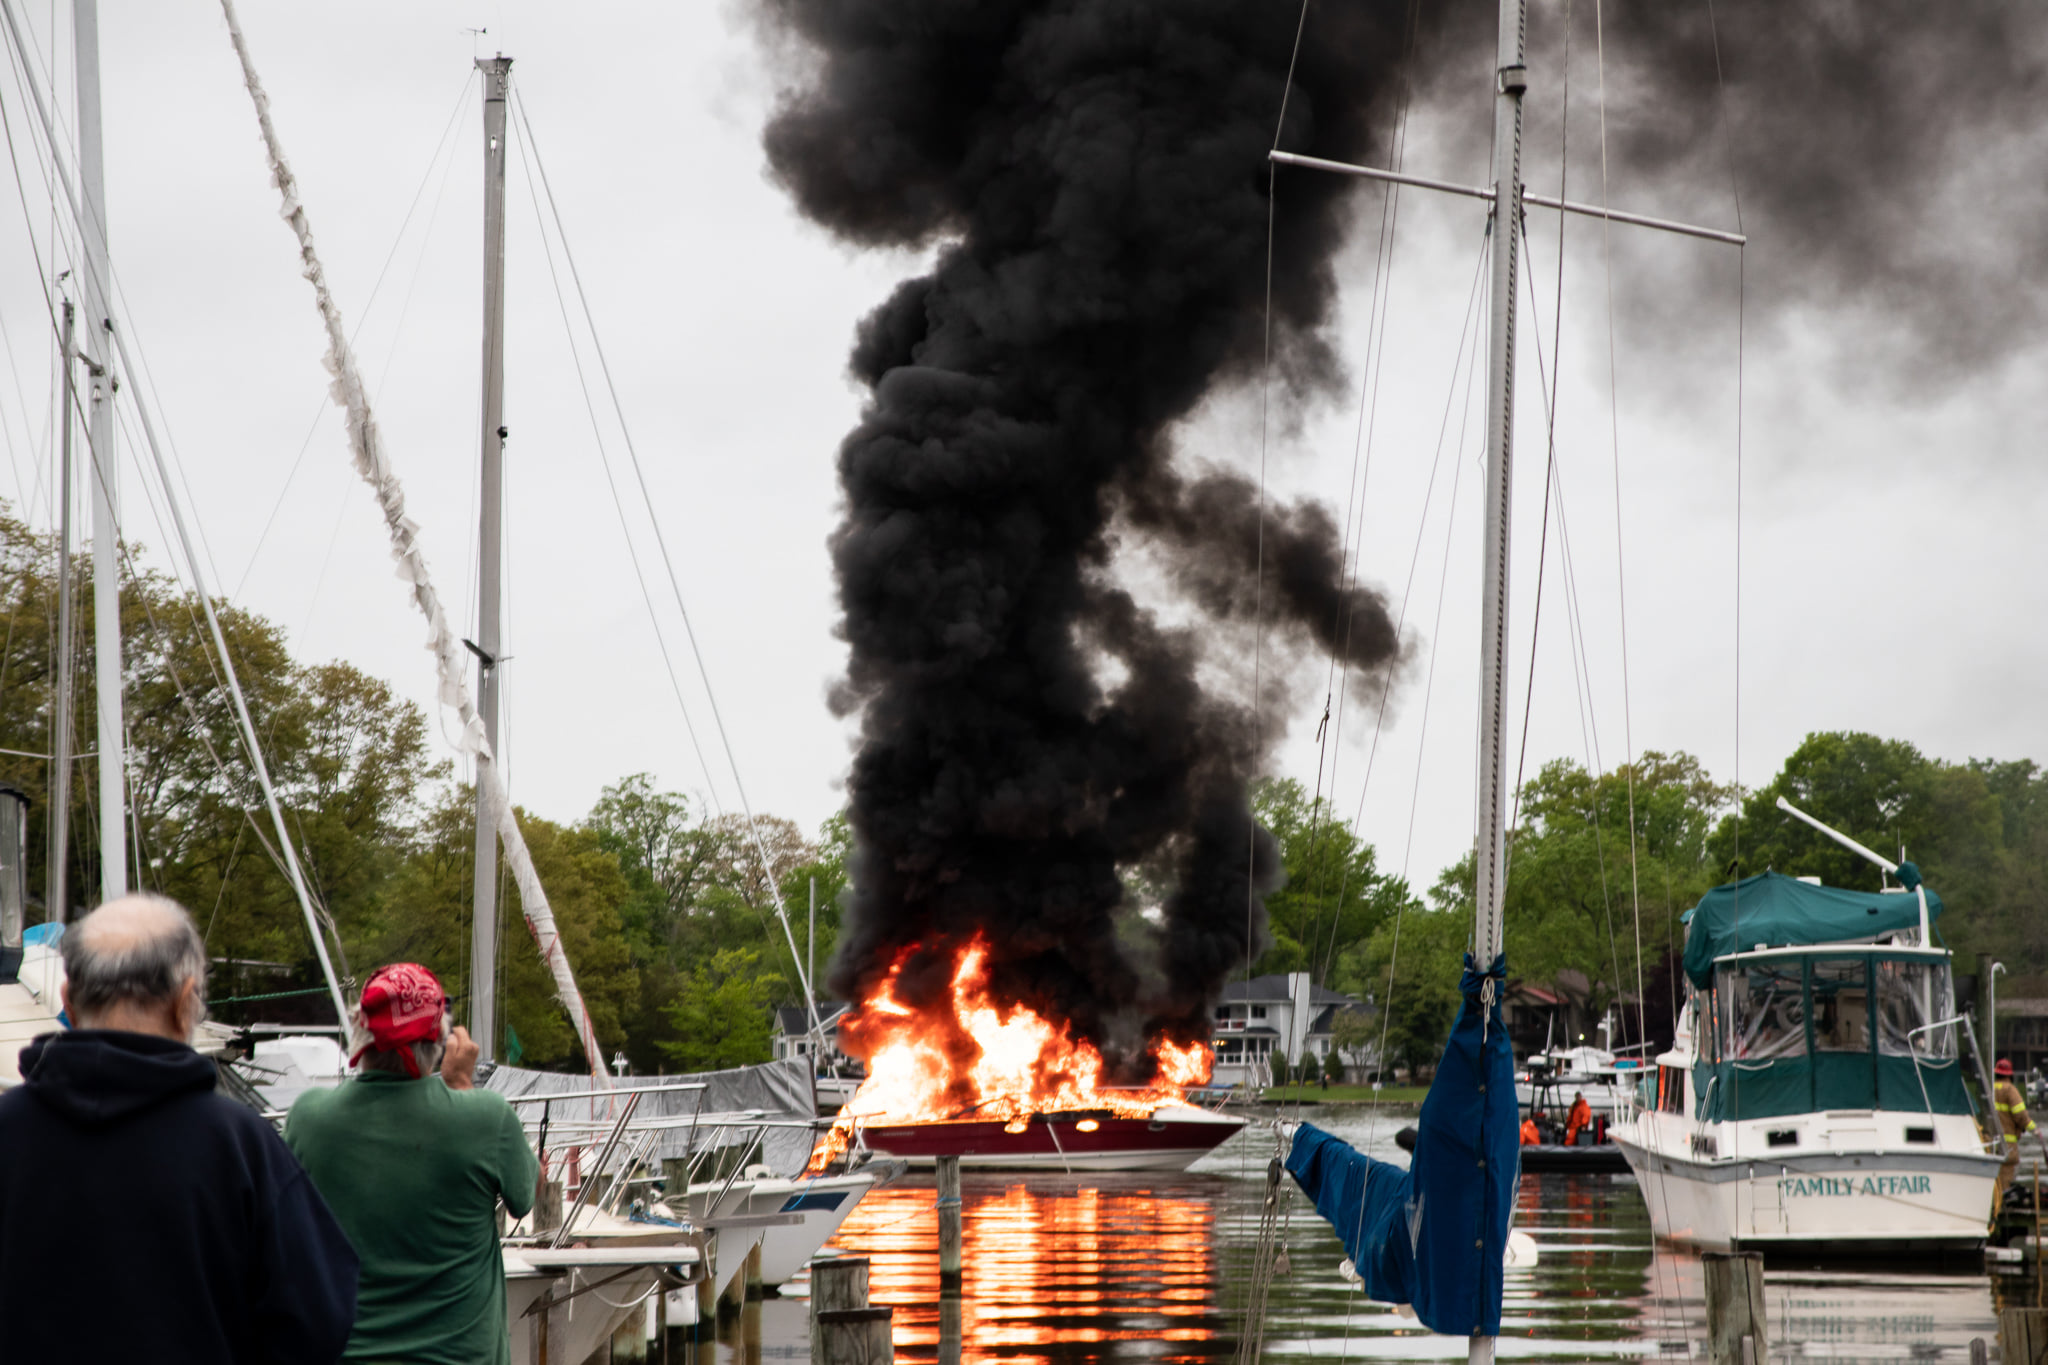 Two Narrowly Escape Boat Engine Fire off Rhode River